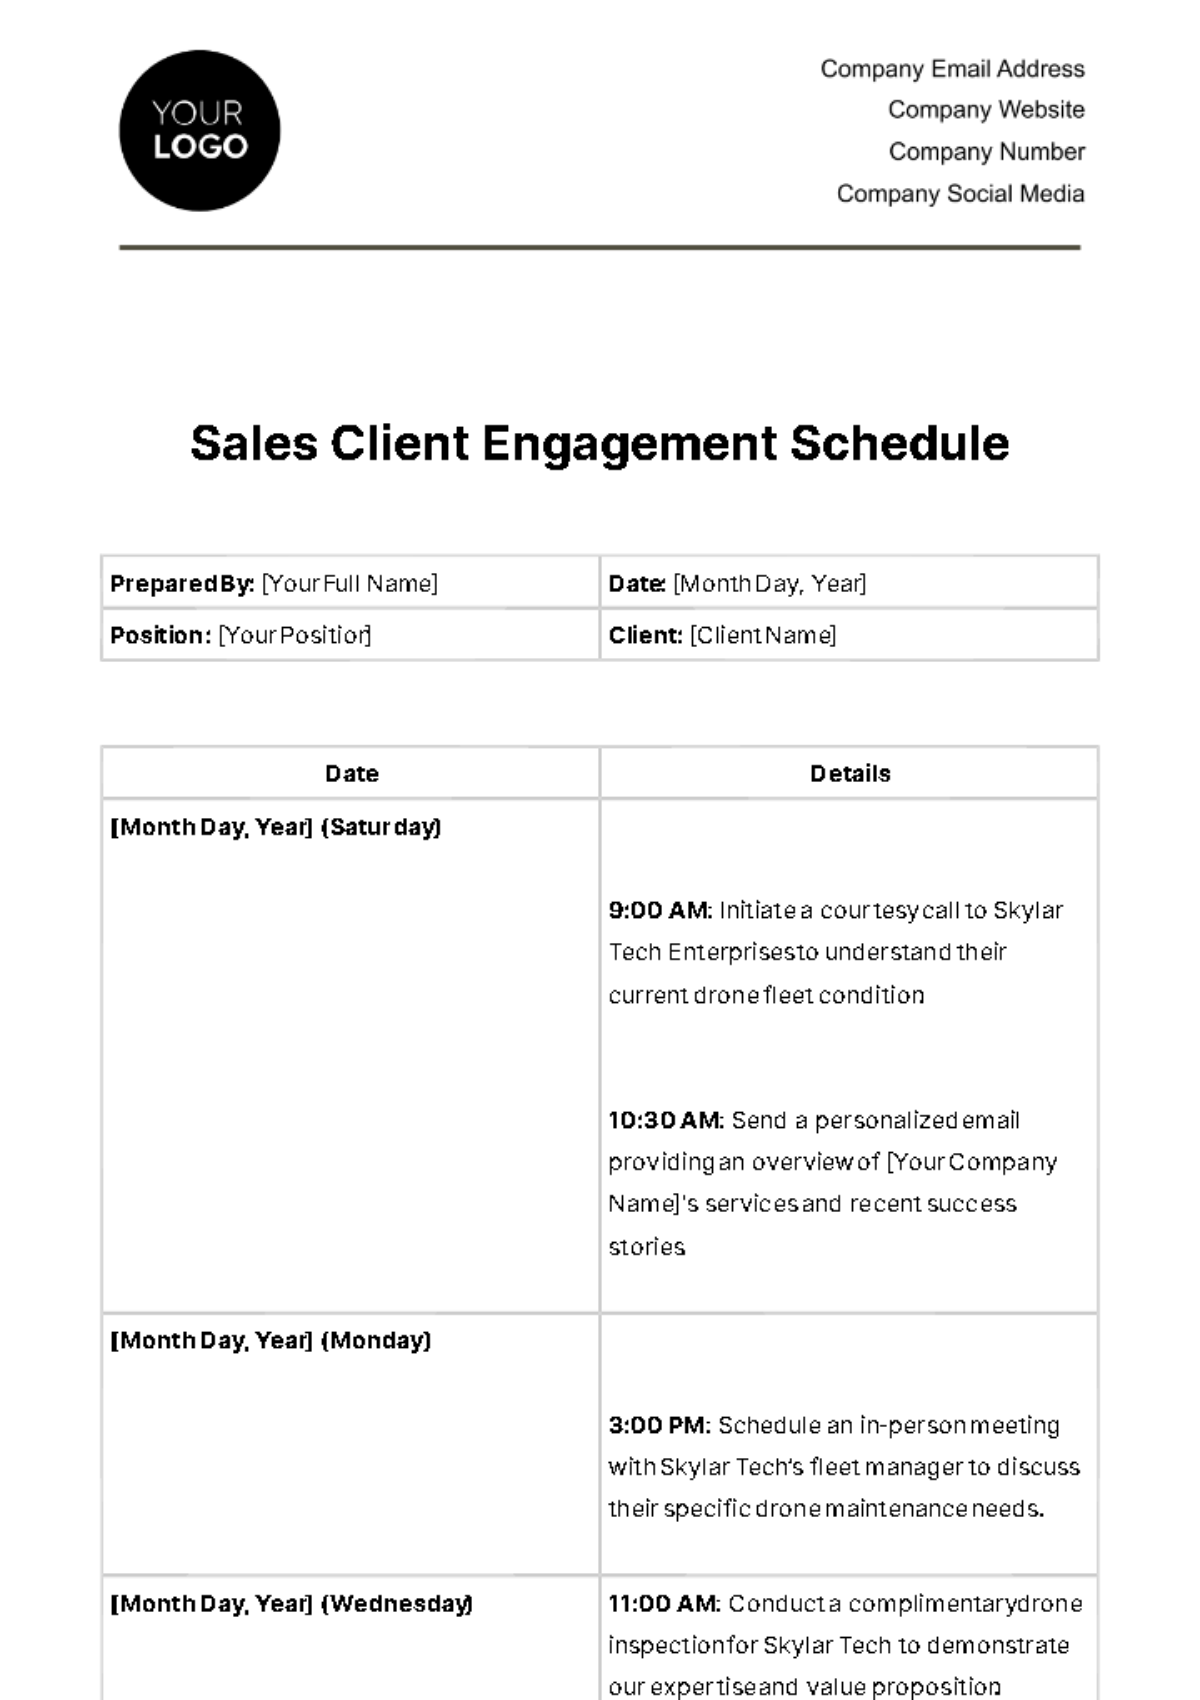 Free Sales Client Engagement Schedule Template